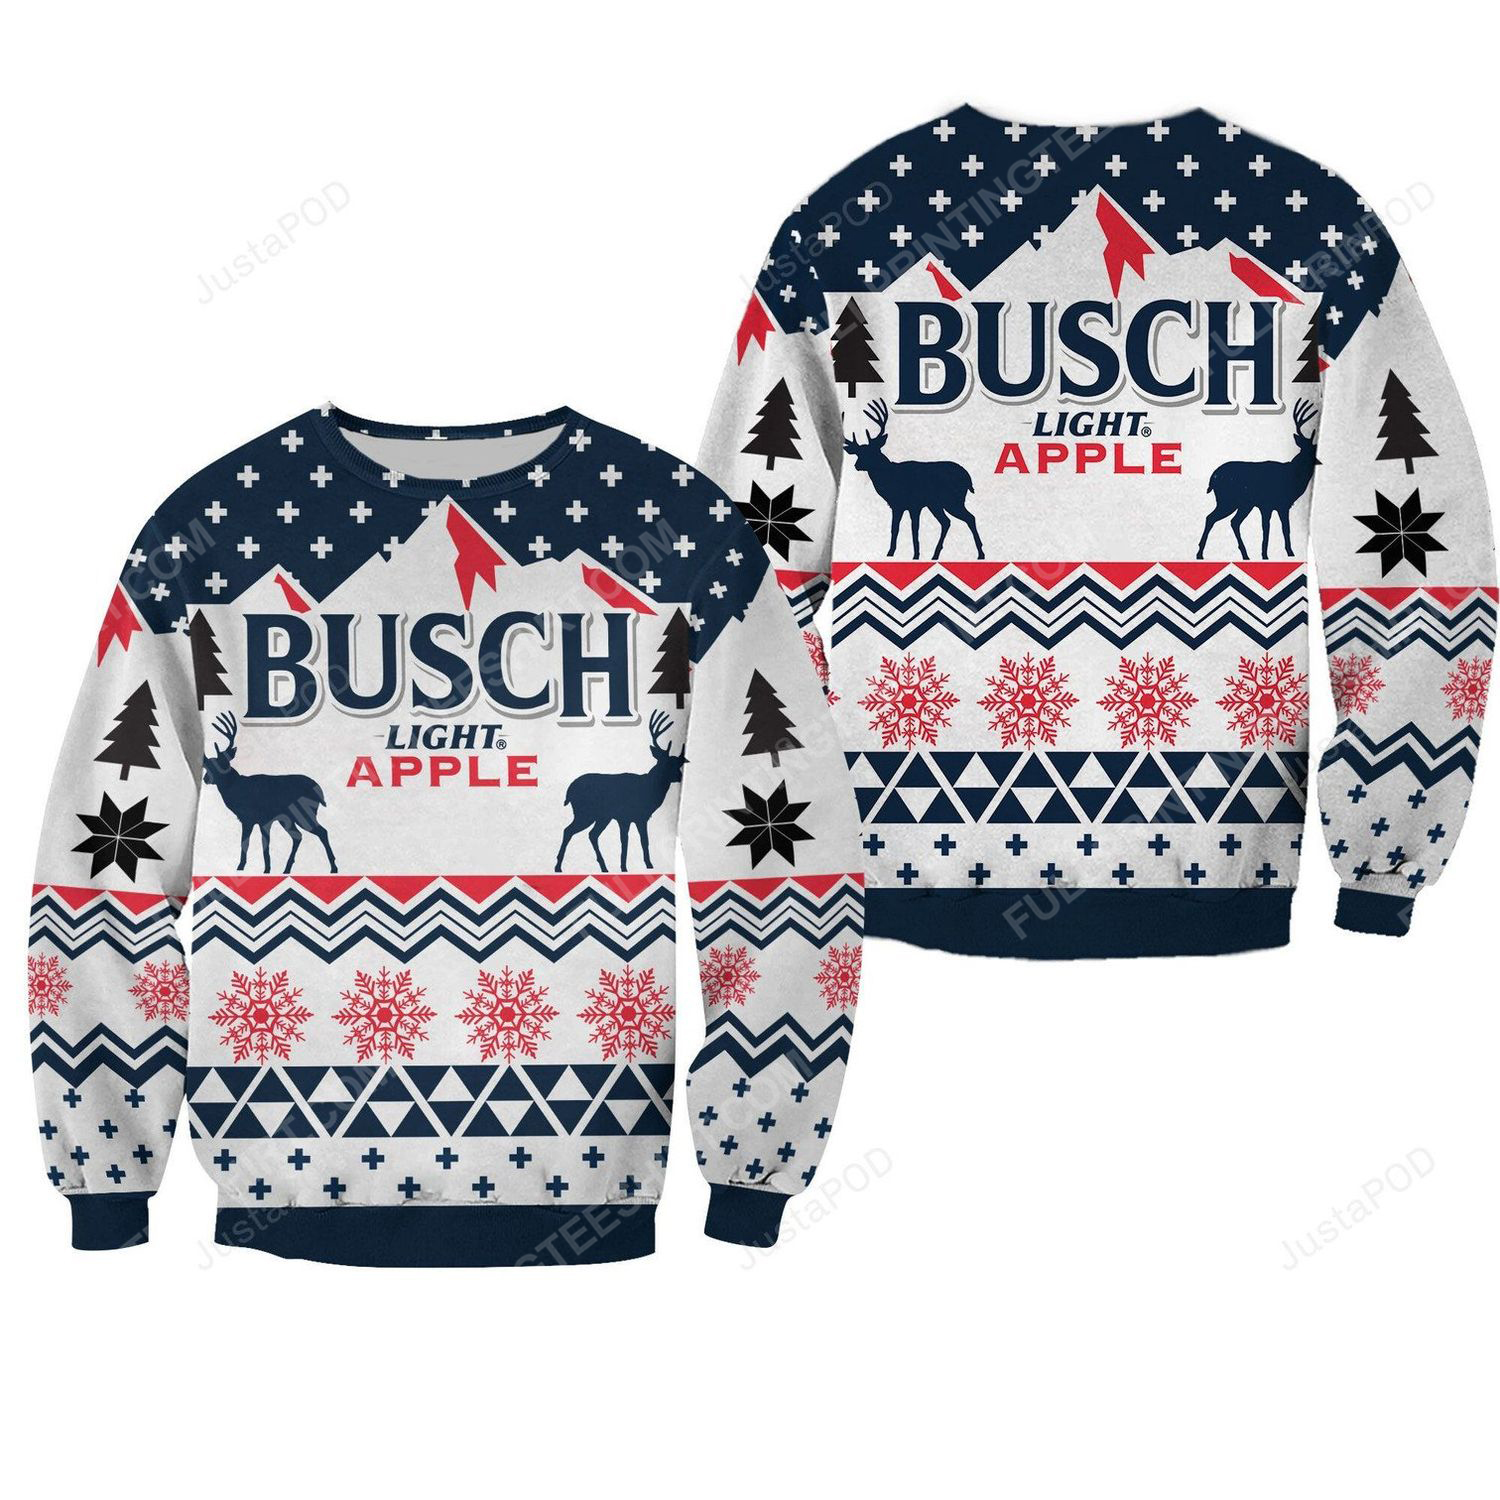 Busch light apple christmas gift ugly christmas sweater